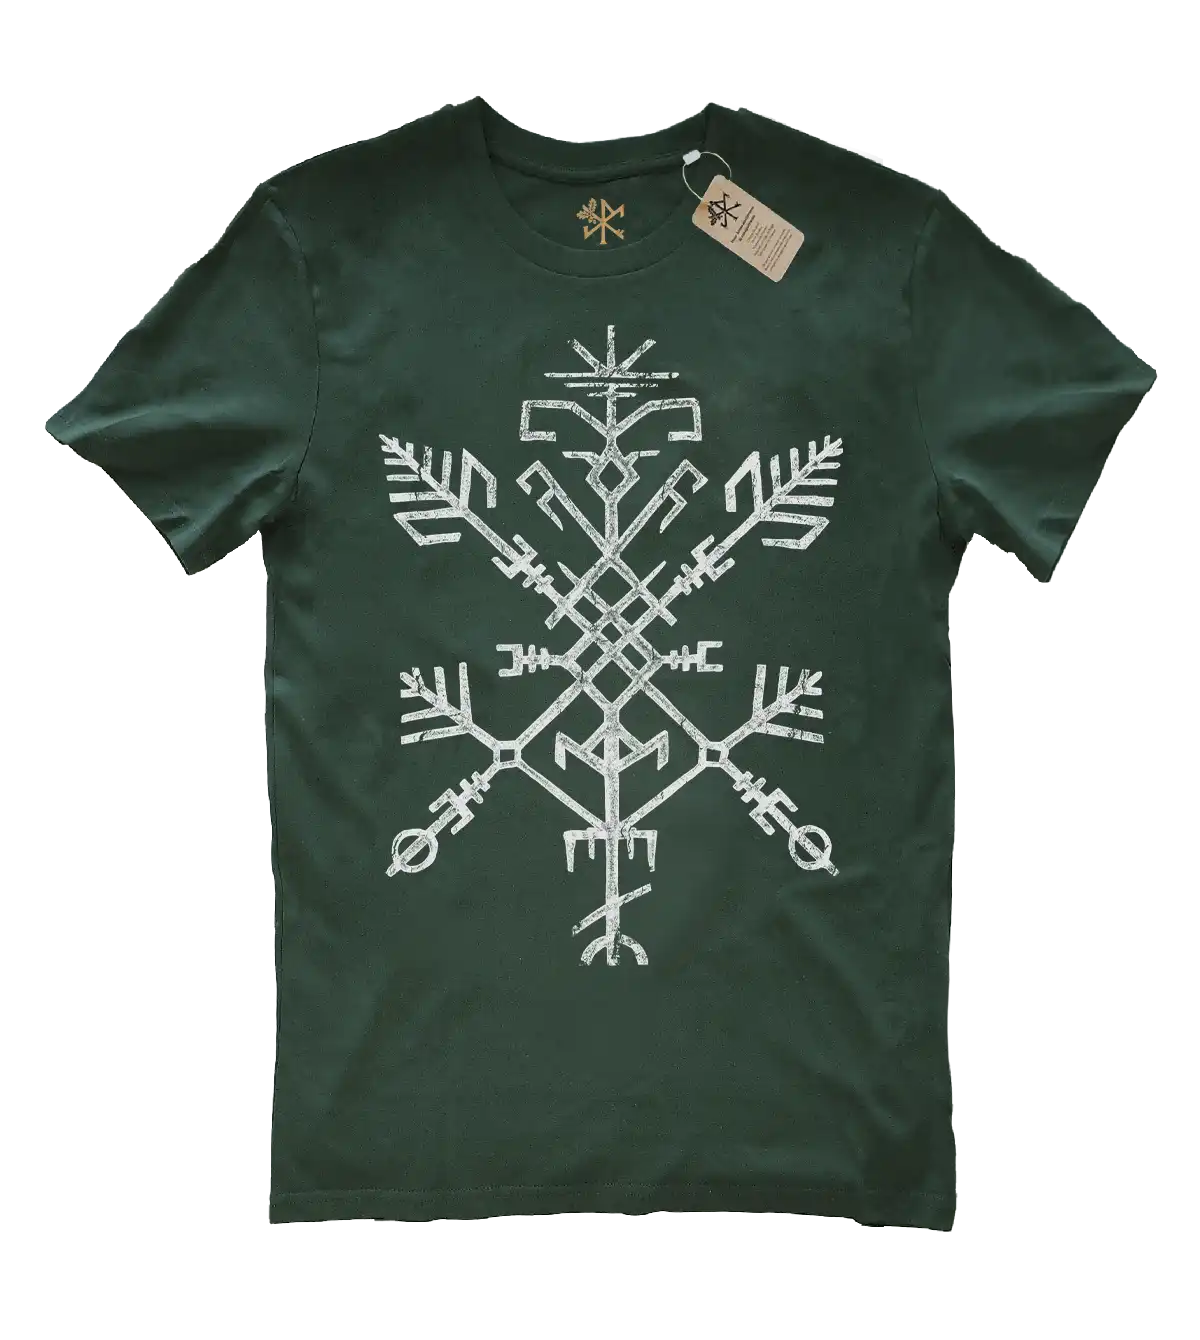 Svarrun - t-shirt nordique folklore islandais